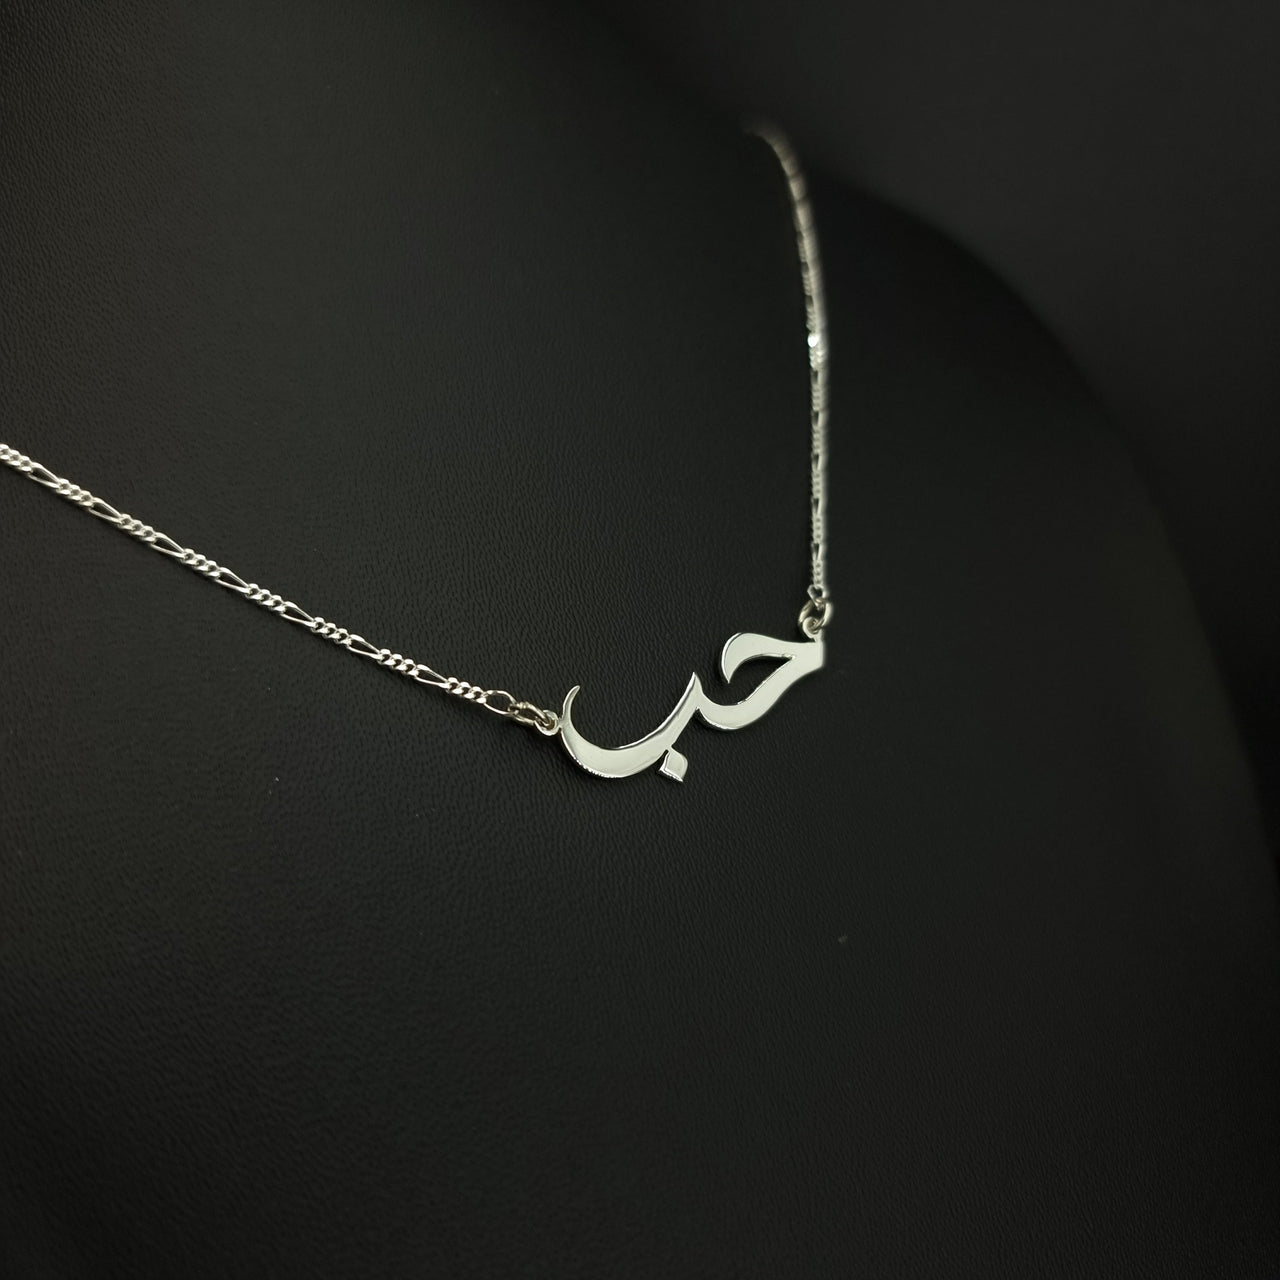 925 Silver "حب" Handmade Necklace